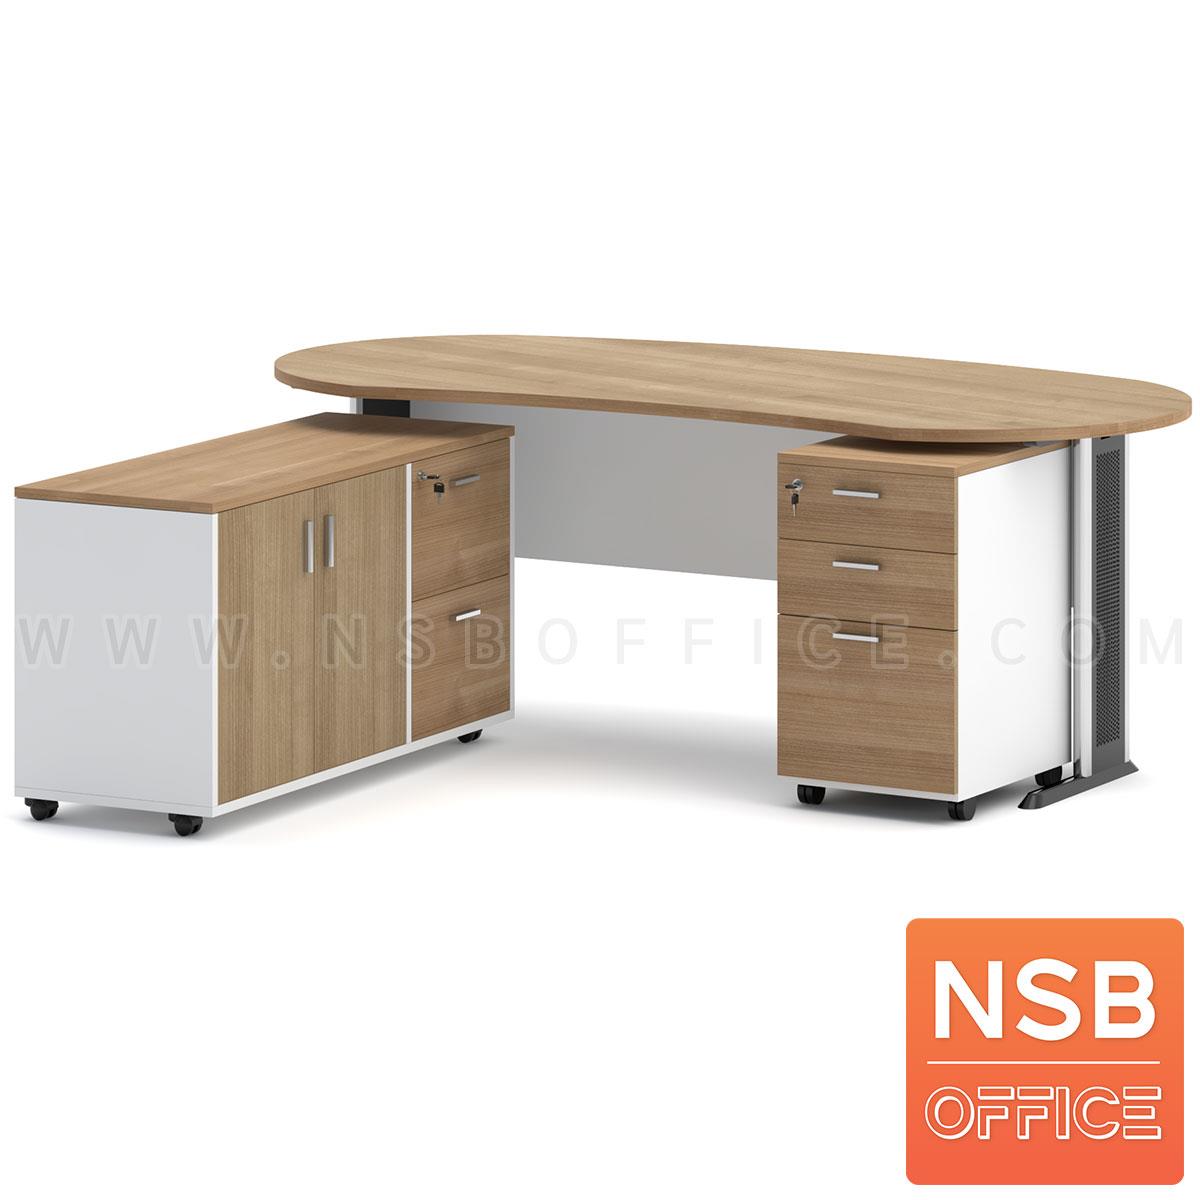 A30A049:โต๊ะผู้บริหาร รุ่น Bersches (เบอร์เชส) ขนาด 200W cm. พร้อมตู้ข้างและลิ้นชักล้อเลื่อน